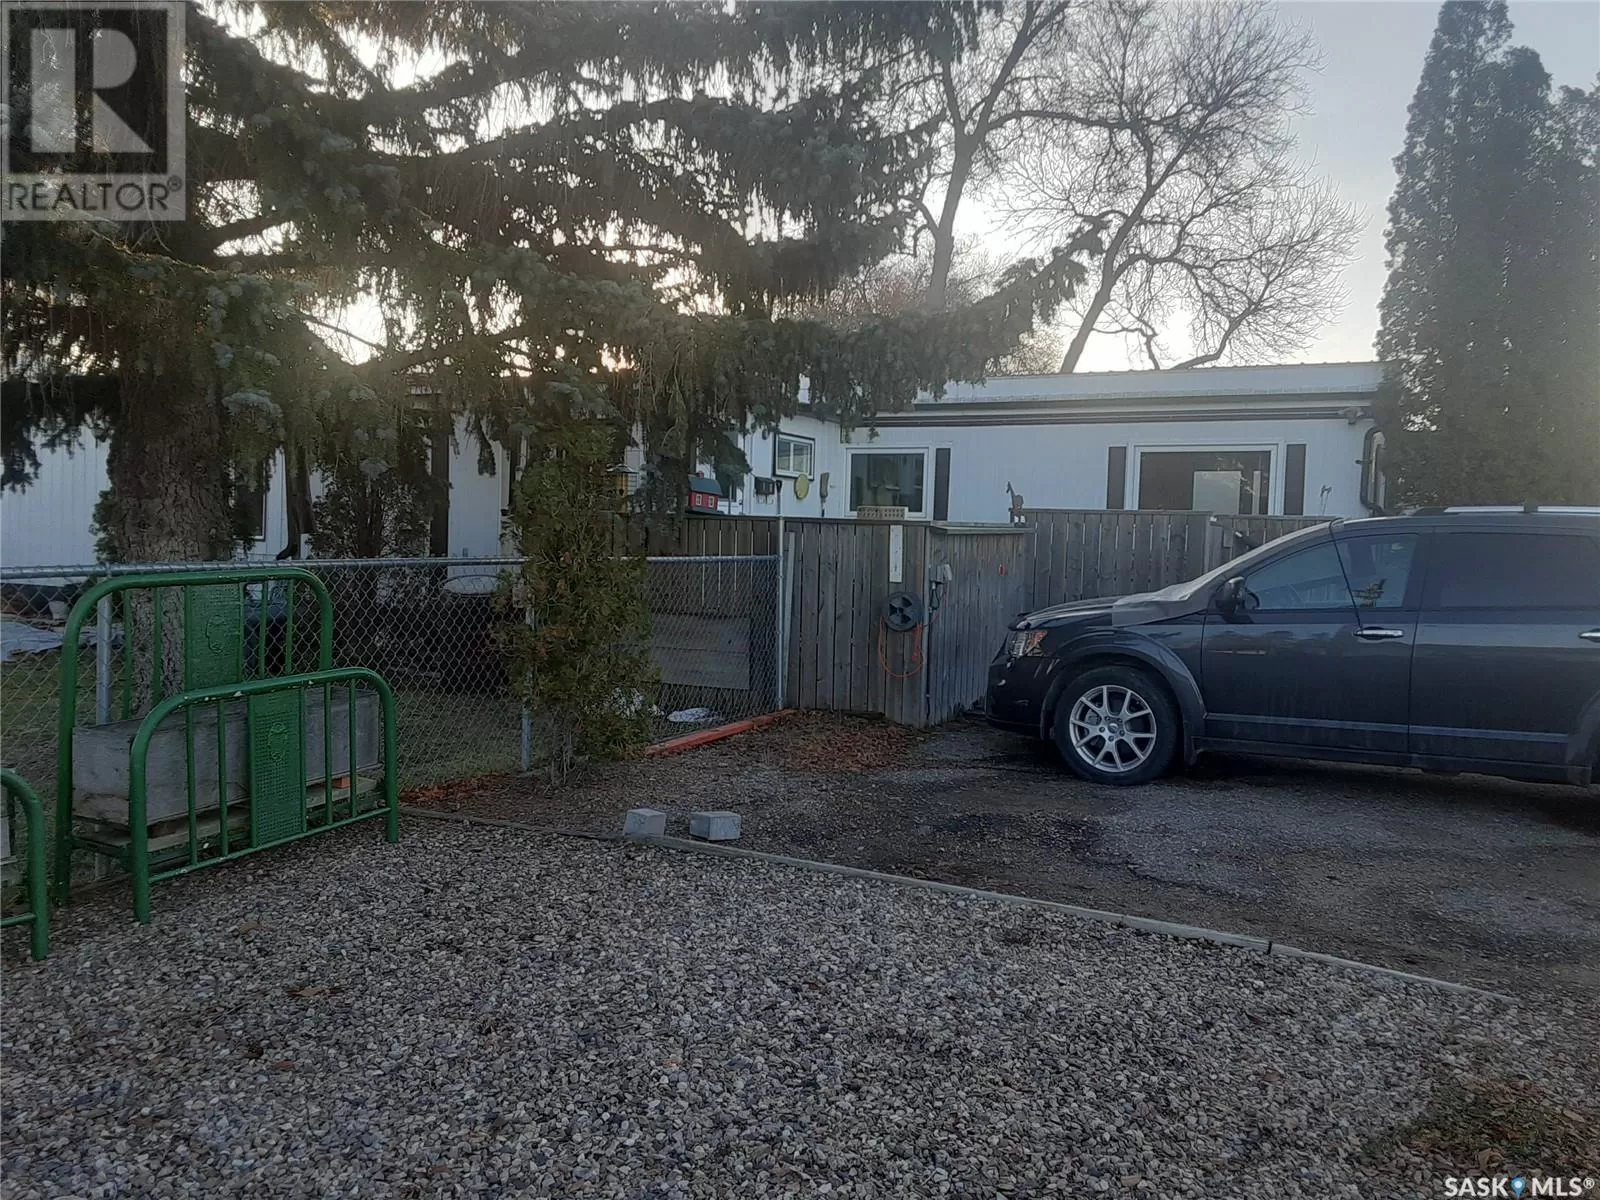 Mobile Home for rent: G1 291 Jackson Drive, Swift Current, Saskatchewan S9H 4M8